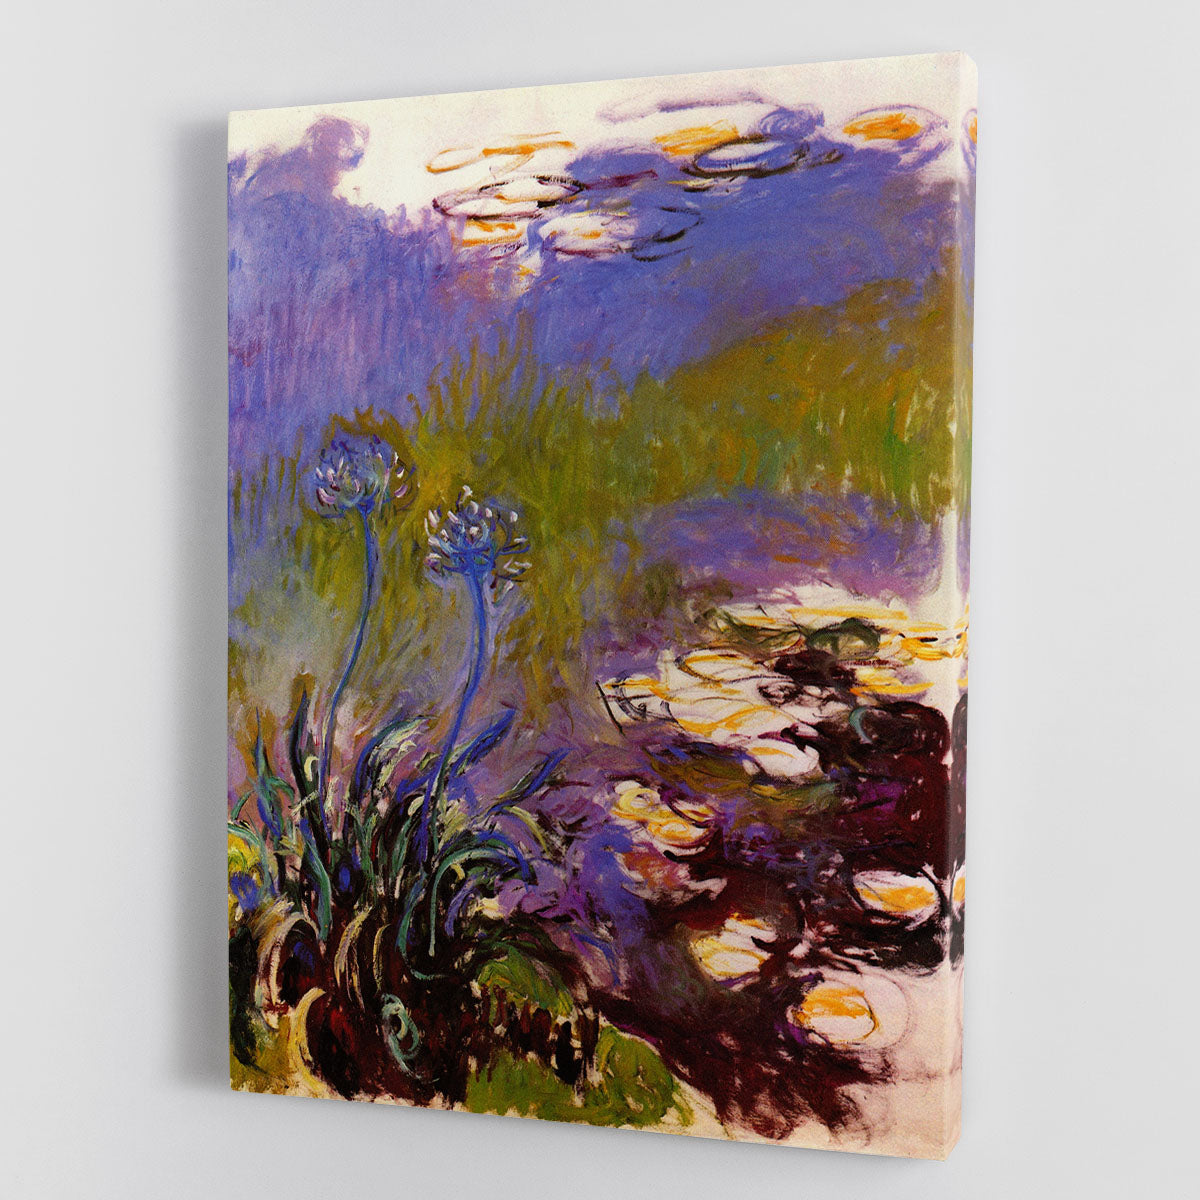 Blue Tuberosen by Monet Canvas Print or Poster - Canvas Art Rocks - 1